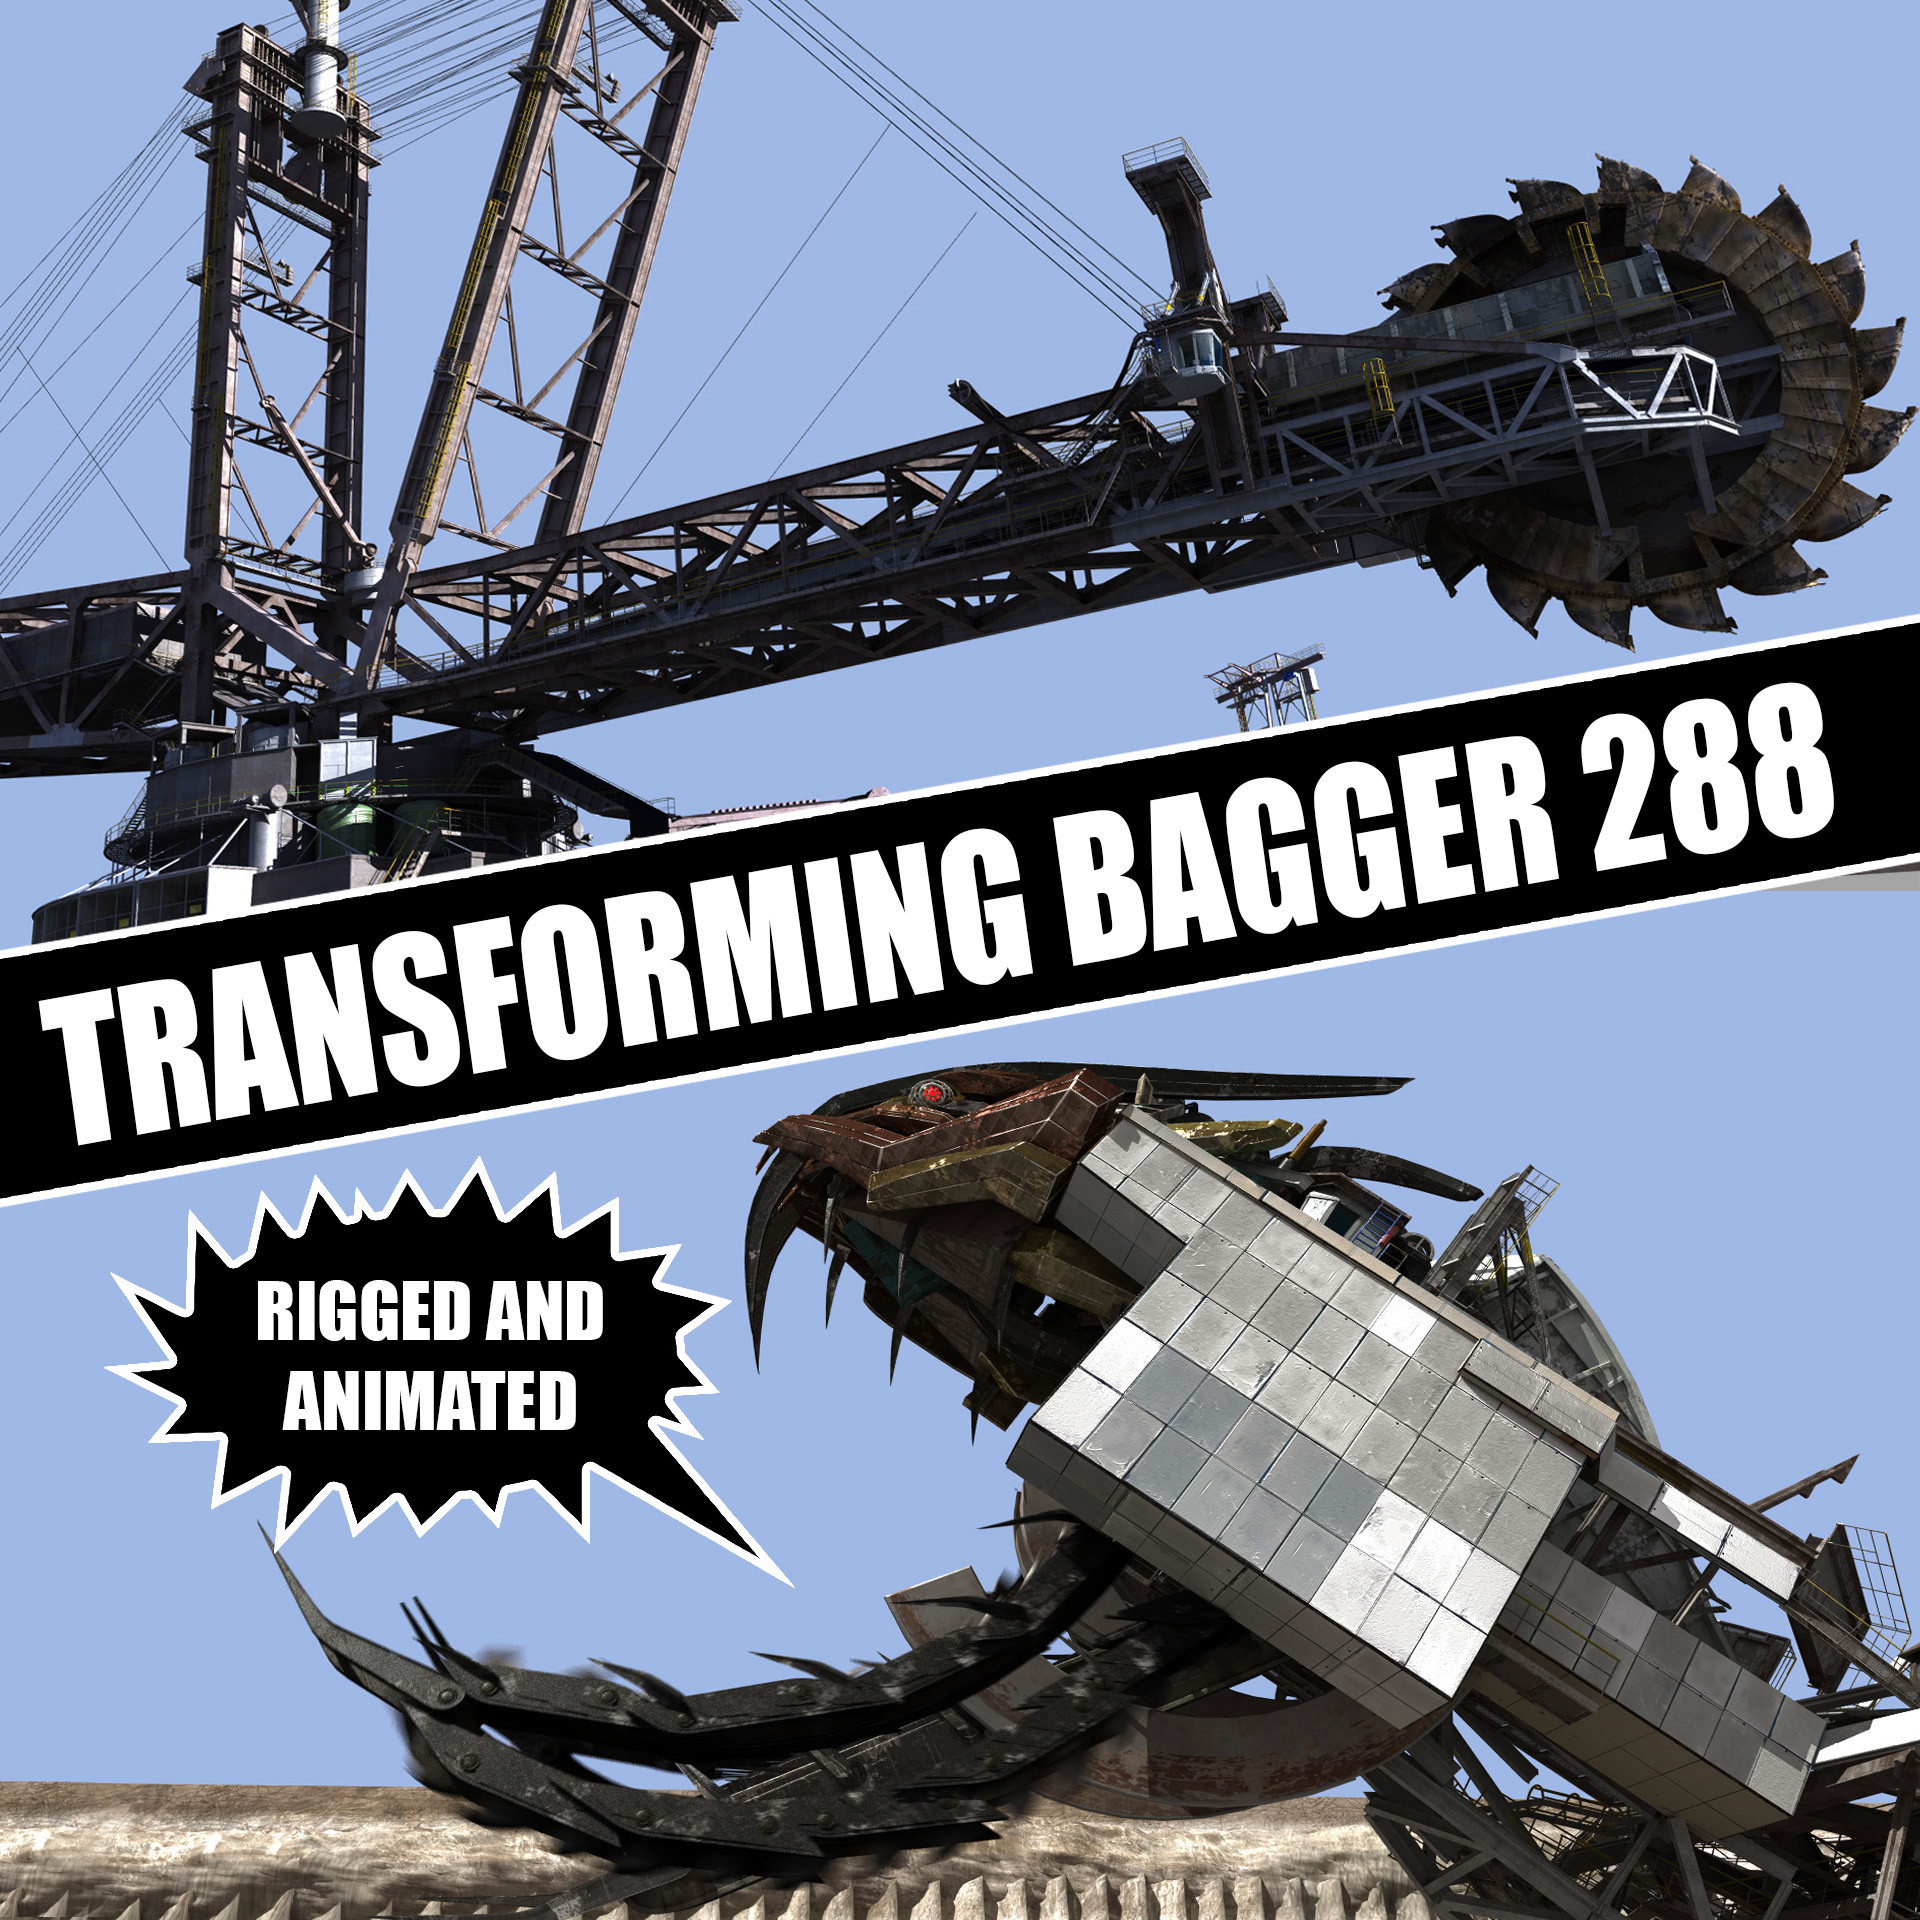 Bagger 288 HD wallpapers, Desktop wallpaper - most viewed